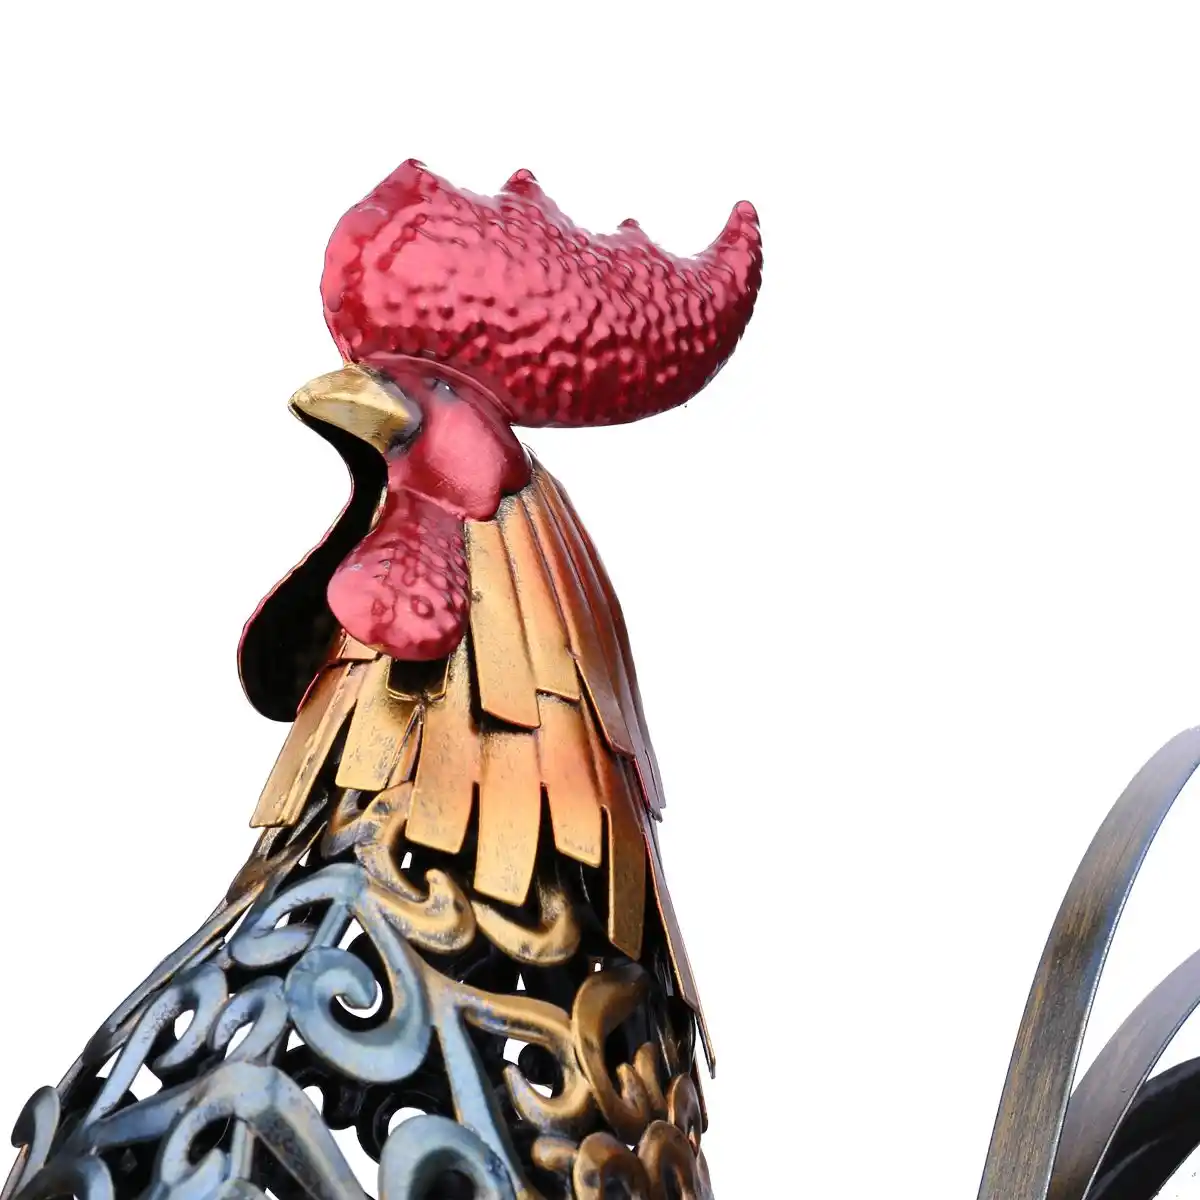 Tooarts Metal Chicken Rooster Ornaments Home Decor Iron Craft Gift Handicraft Animal Figurine